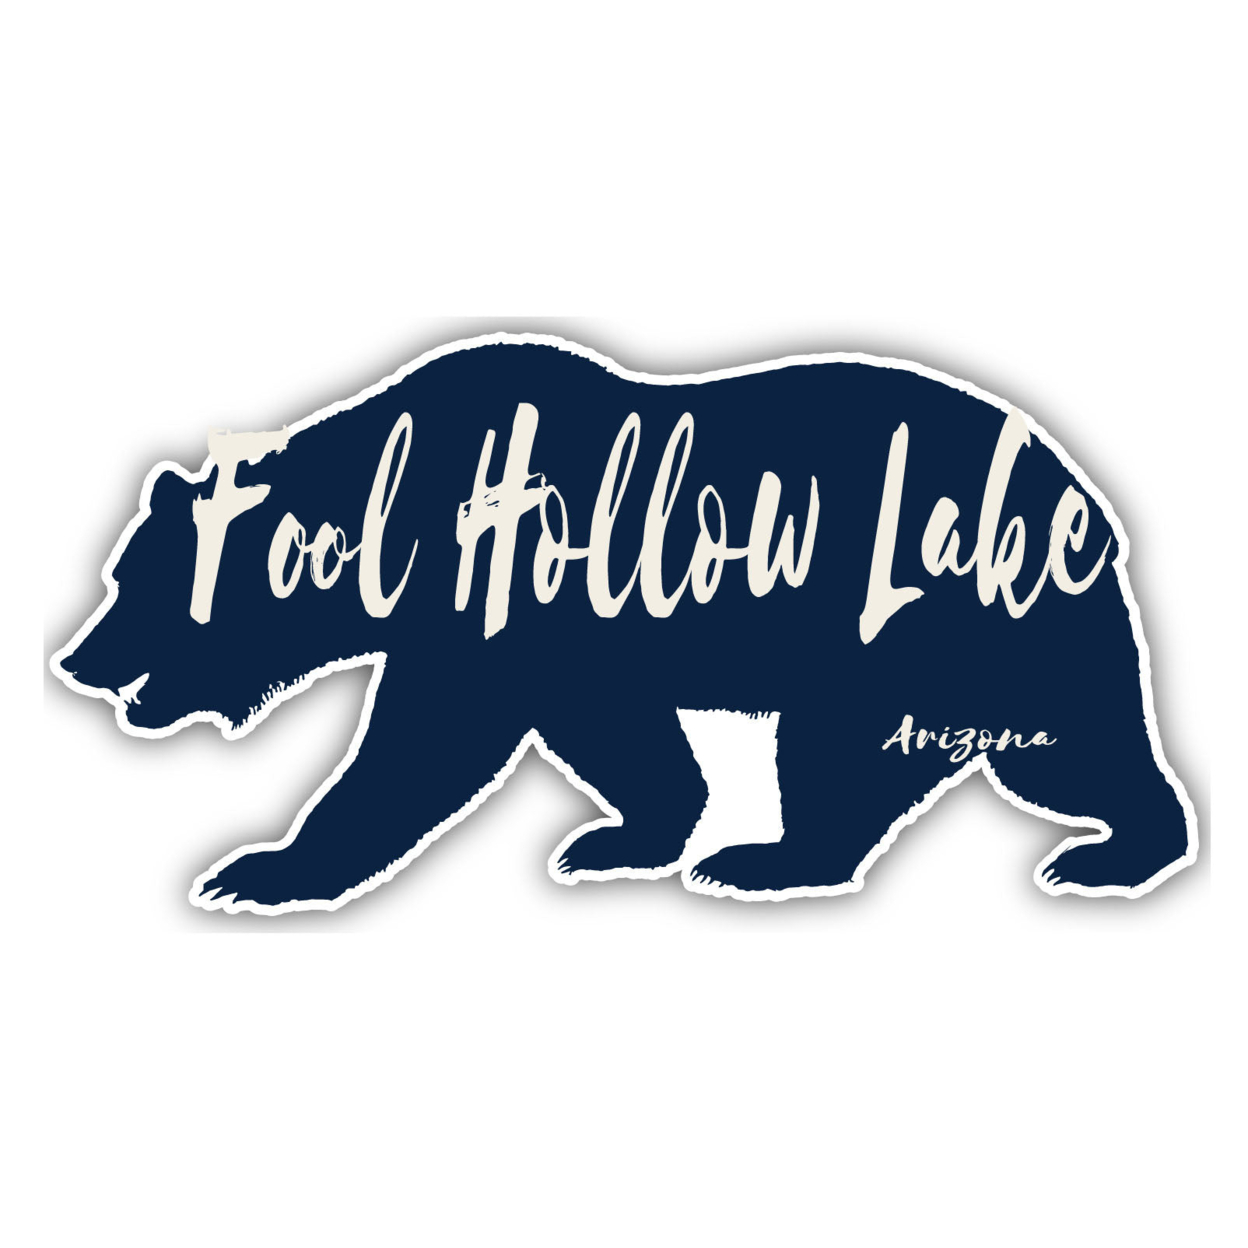 Fool Hollow Lake Arizona Souvenir Decorative Stickers (Choose Theme And Size) - Single Unit, 4-Inch, Camp Life